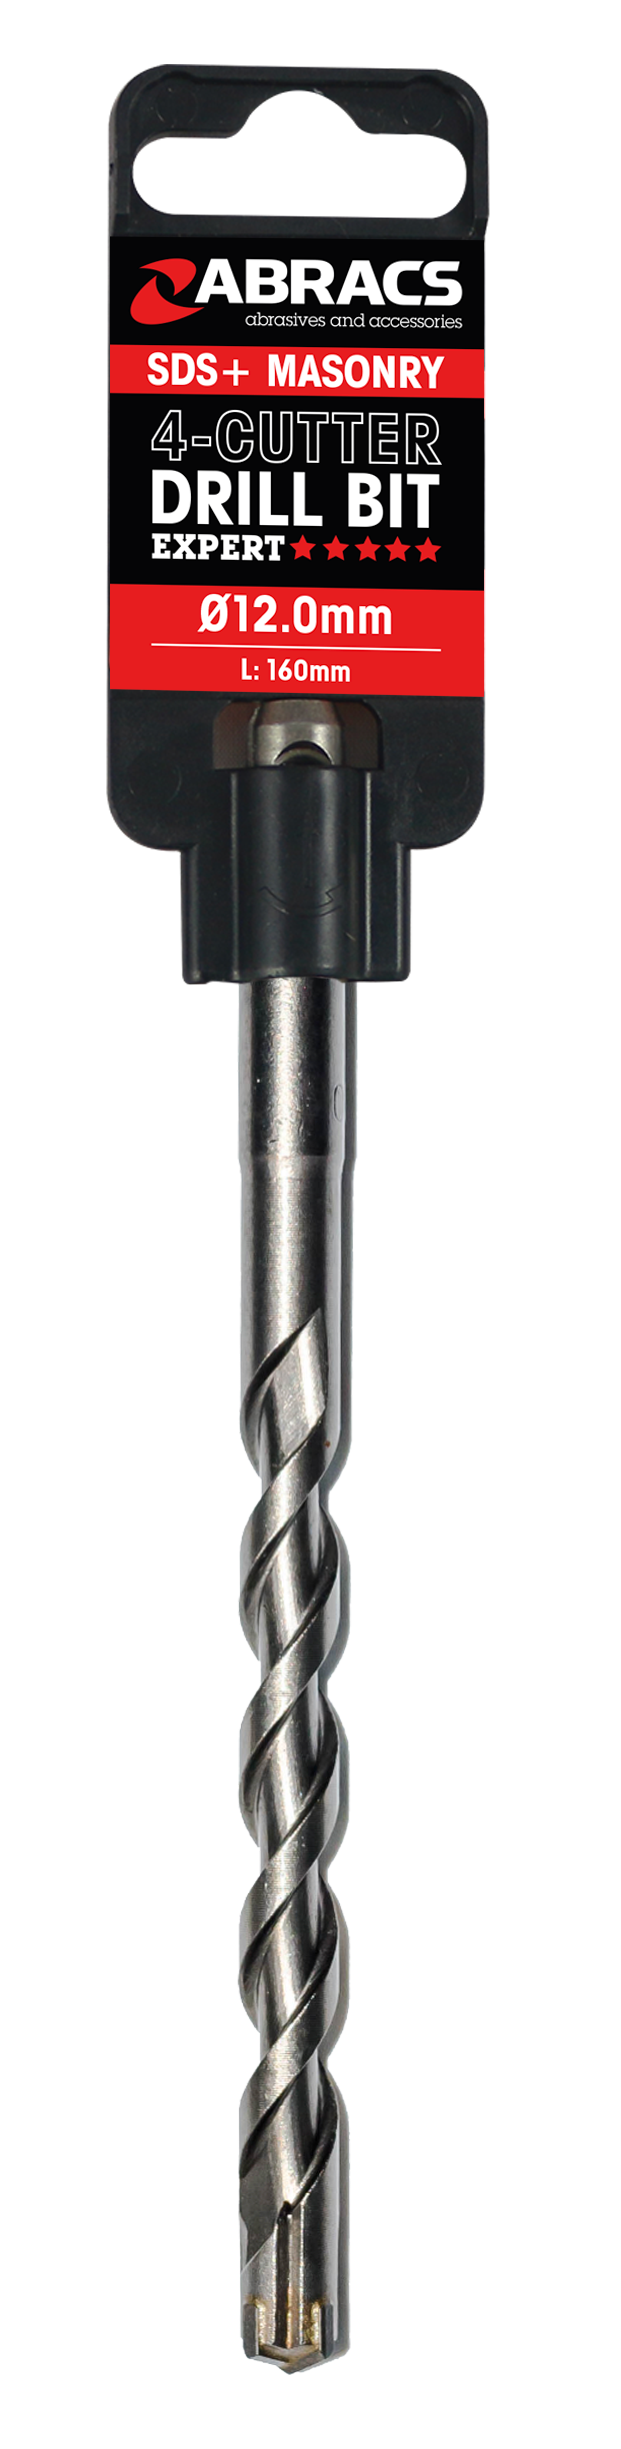 DBCX080210 8.0mm x 210mm SDS+ Masonry Drill Bit - 4 Cutter